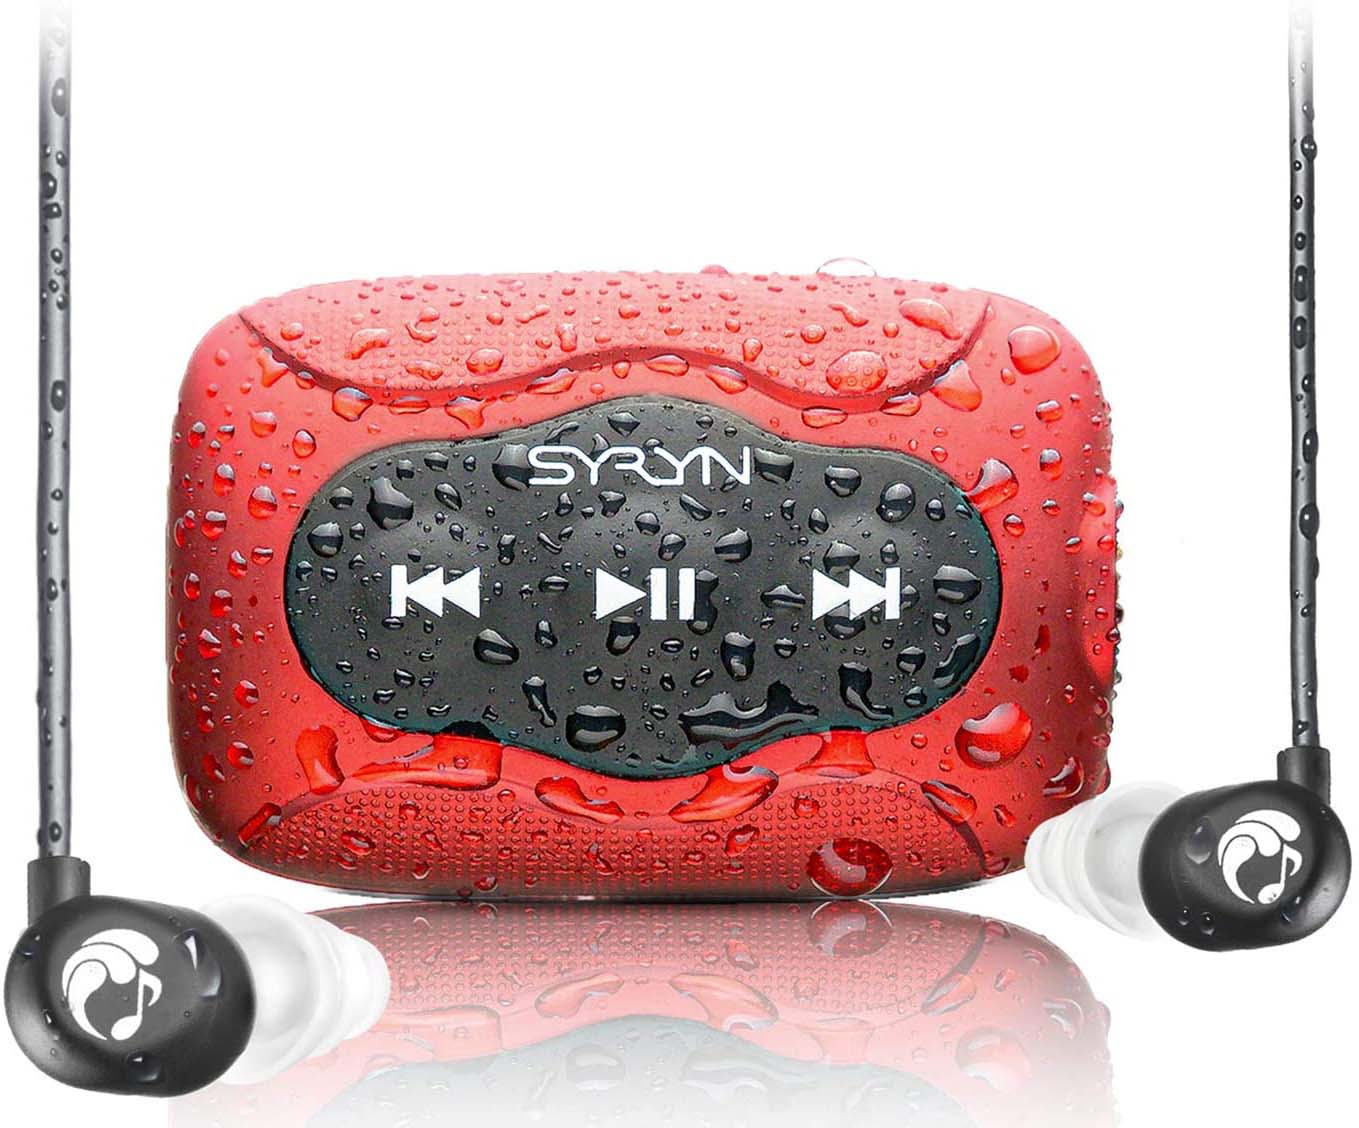 
SYRYN waterproof MP3 player
